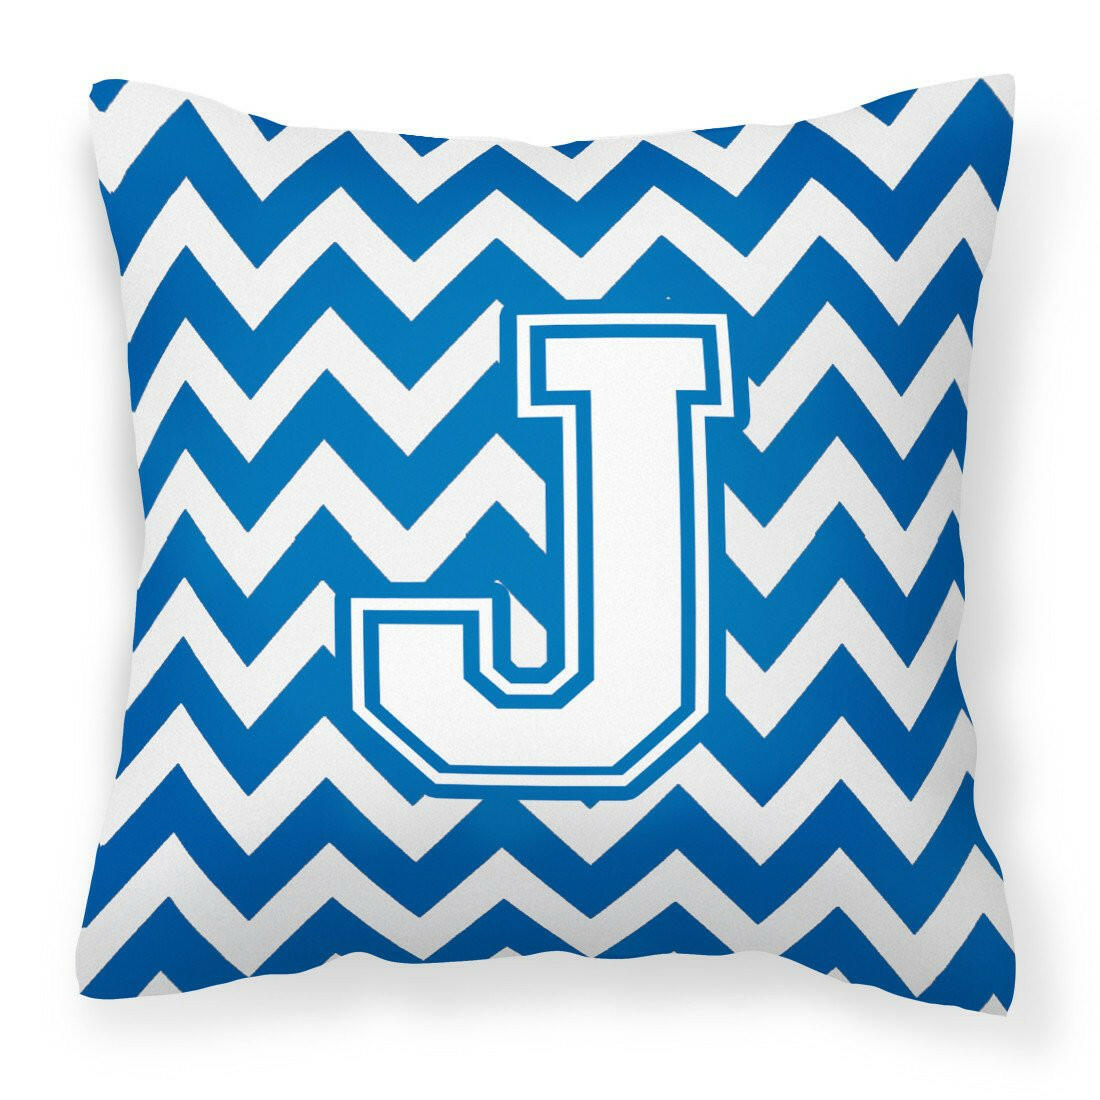 Letter J Chevron Blue and White Fabric Decorative Pillow CJ1045-JPW1414 by Caroline's Treasures